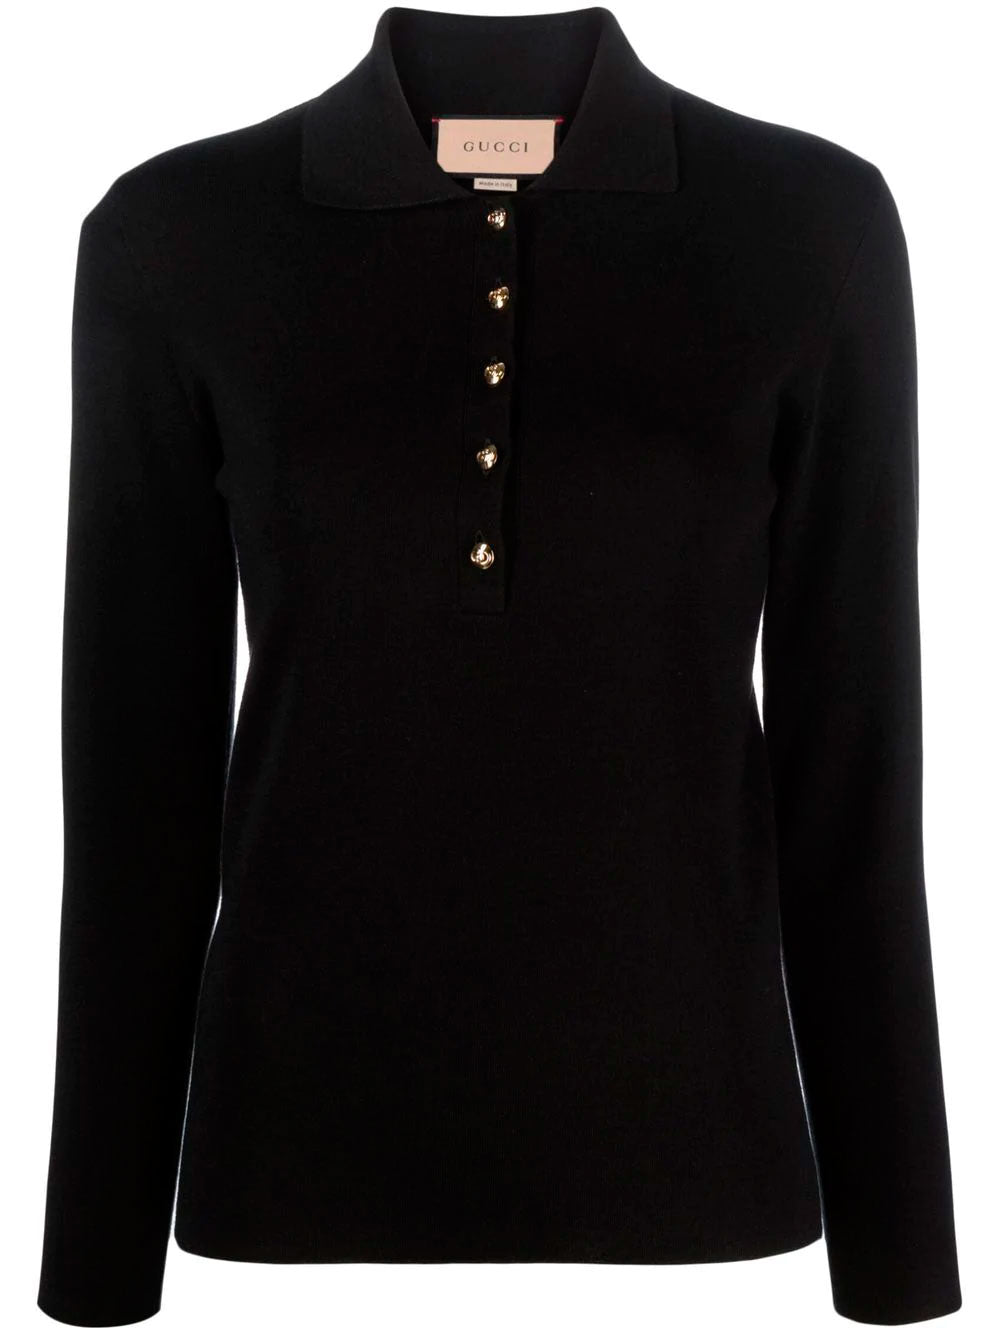 Gucci black cashmere polo shirt